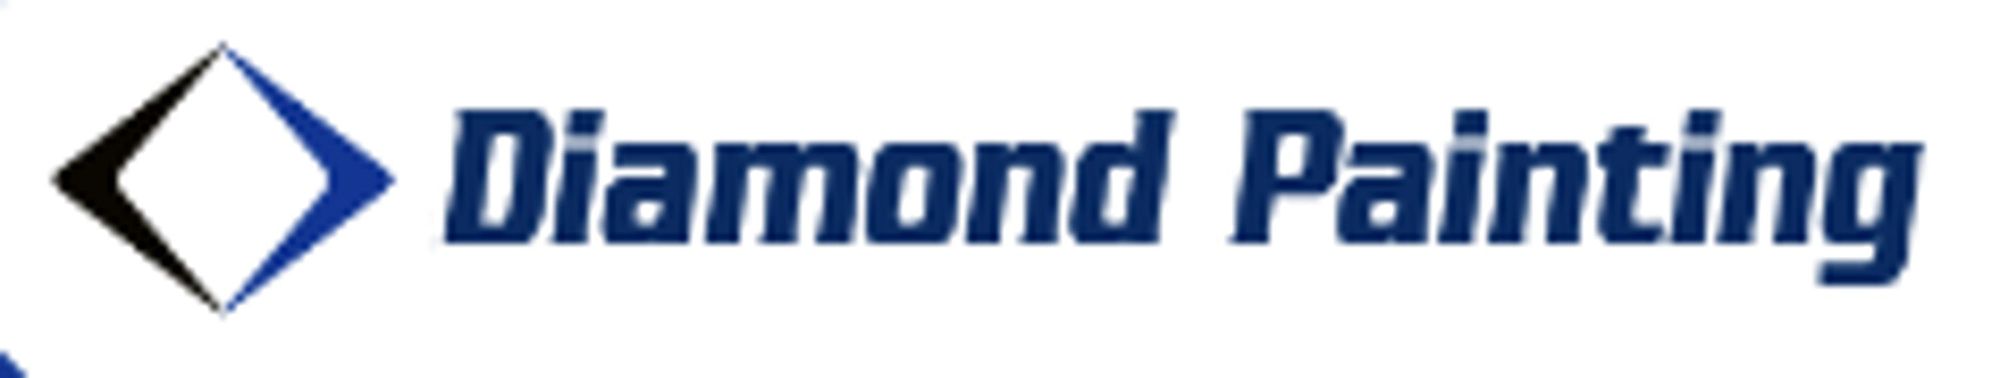 Company logo of Diamond Painting 